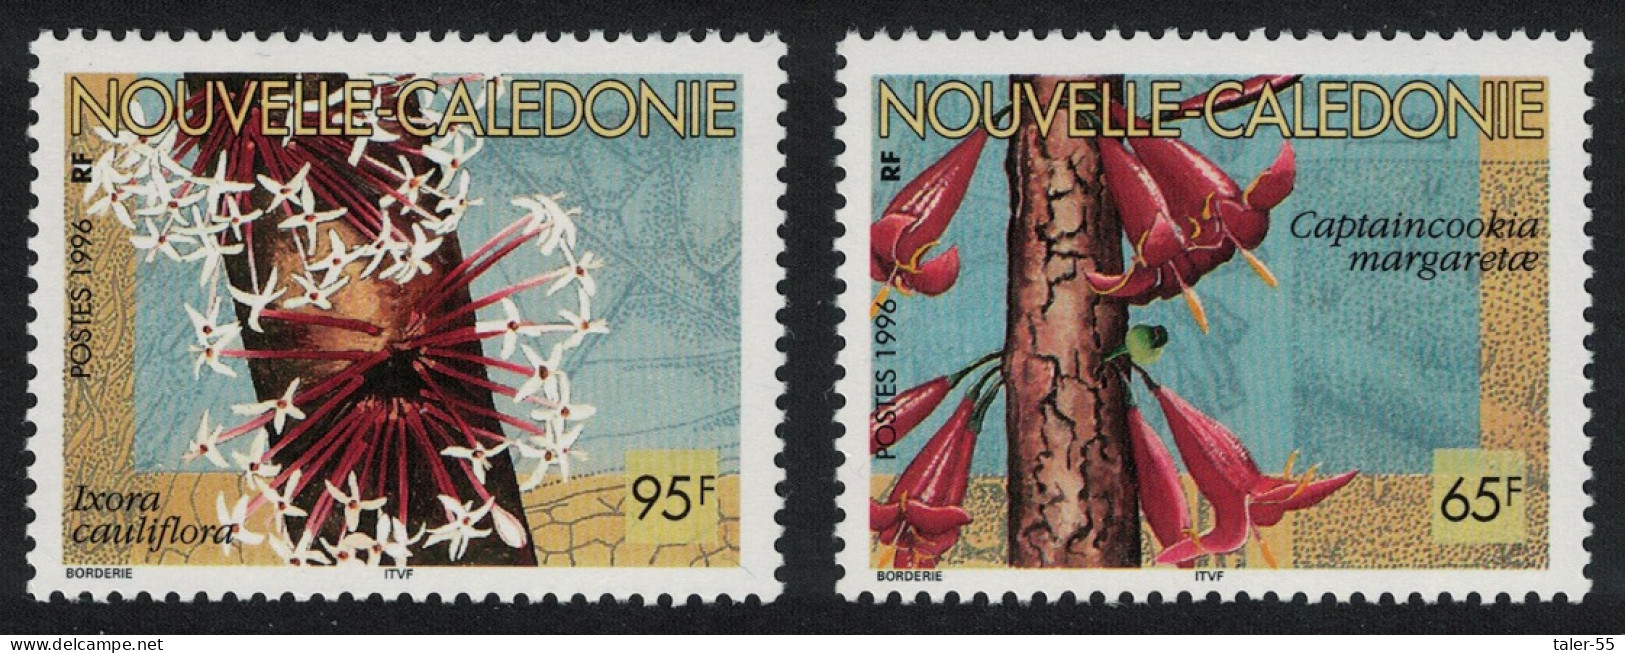 New Caledonia 'Captaincookia Margaretae' Flowers 2v 1996 MNH SG#1057-1058 - Unused Stamps